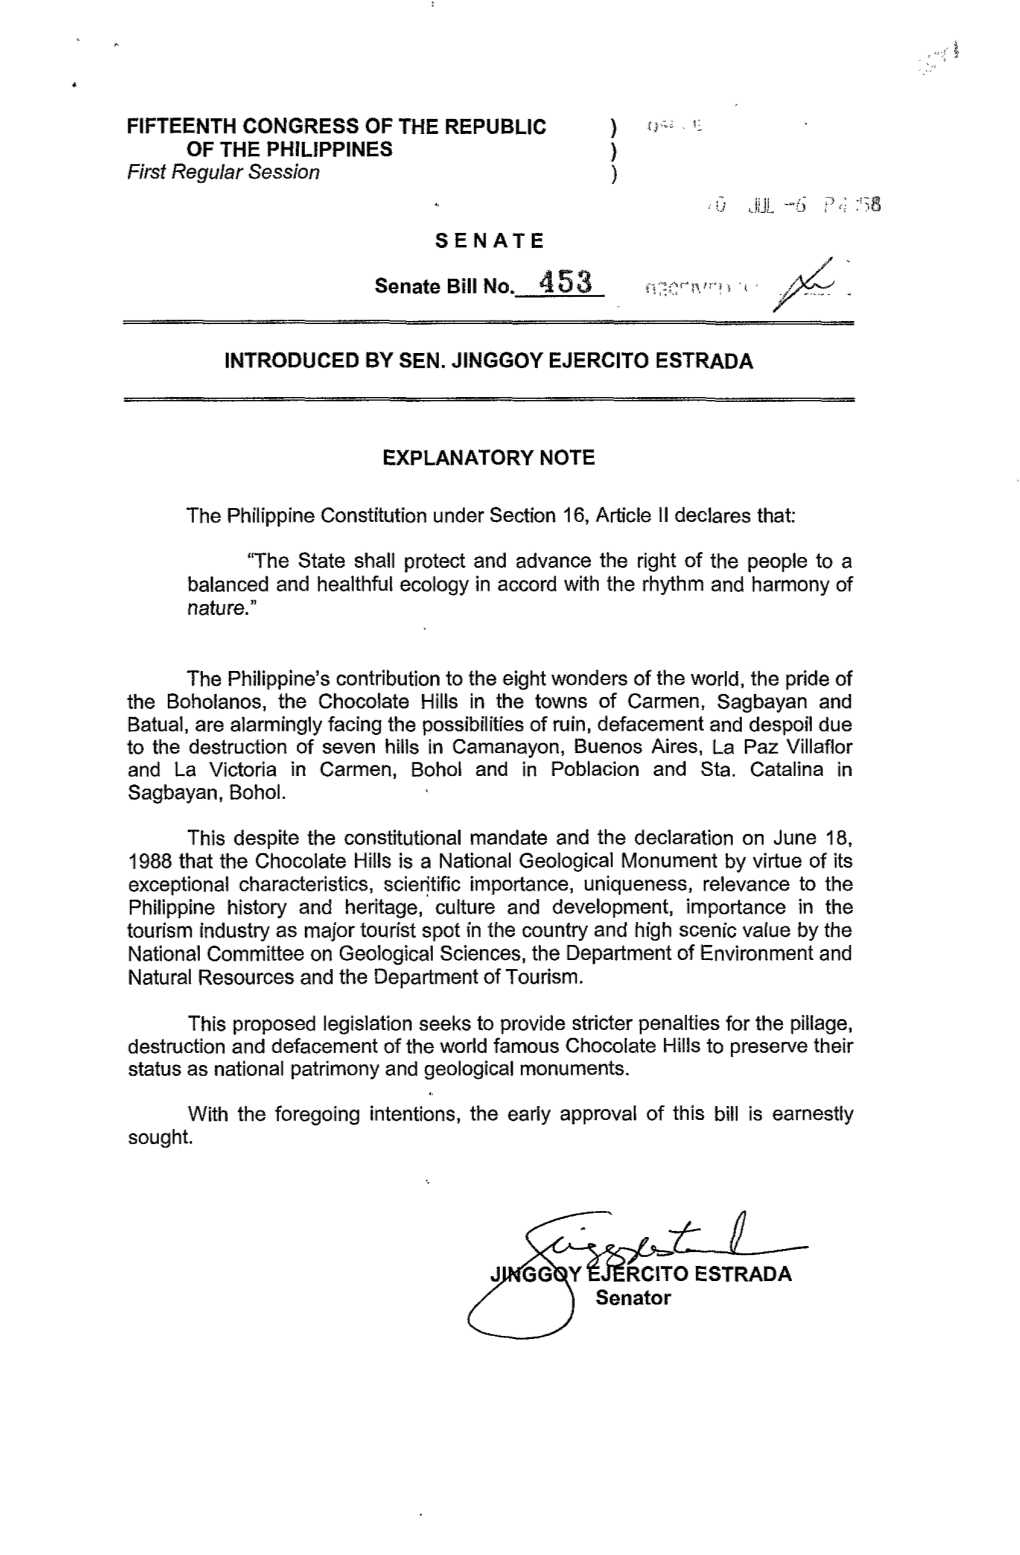 FIFTEENTH CONGRESS of the REPUBLIC of the PHILIPPINES First Regular Session SENATE Senate Bill No. 453 INTRODUCED by SEN. JINGGO